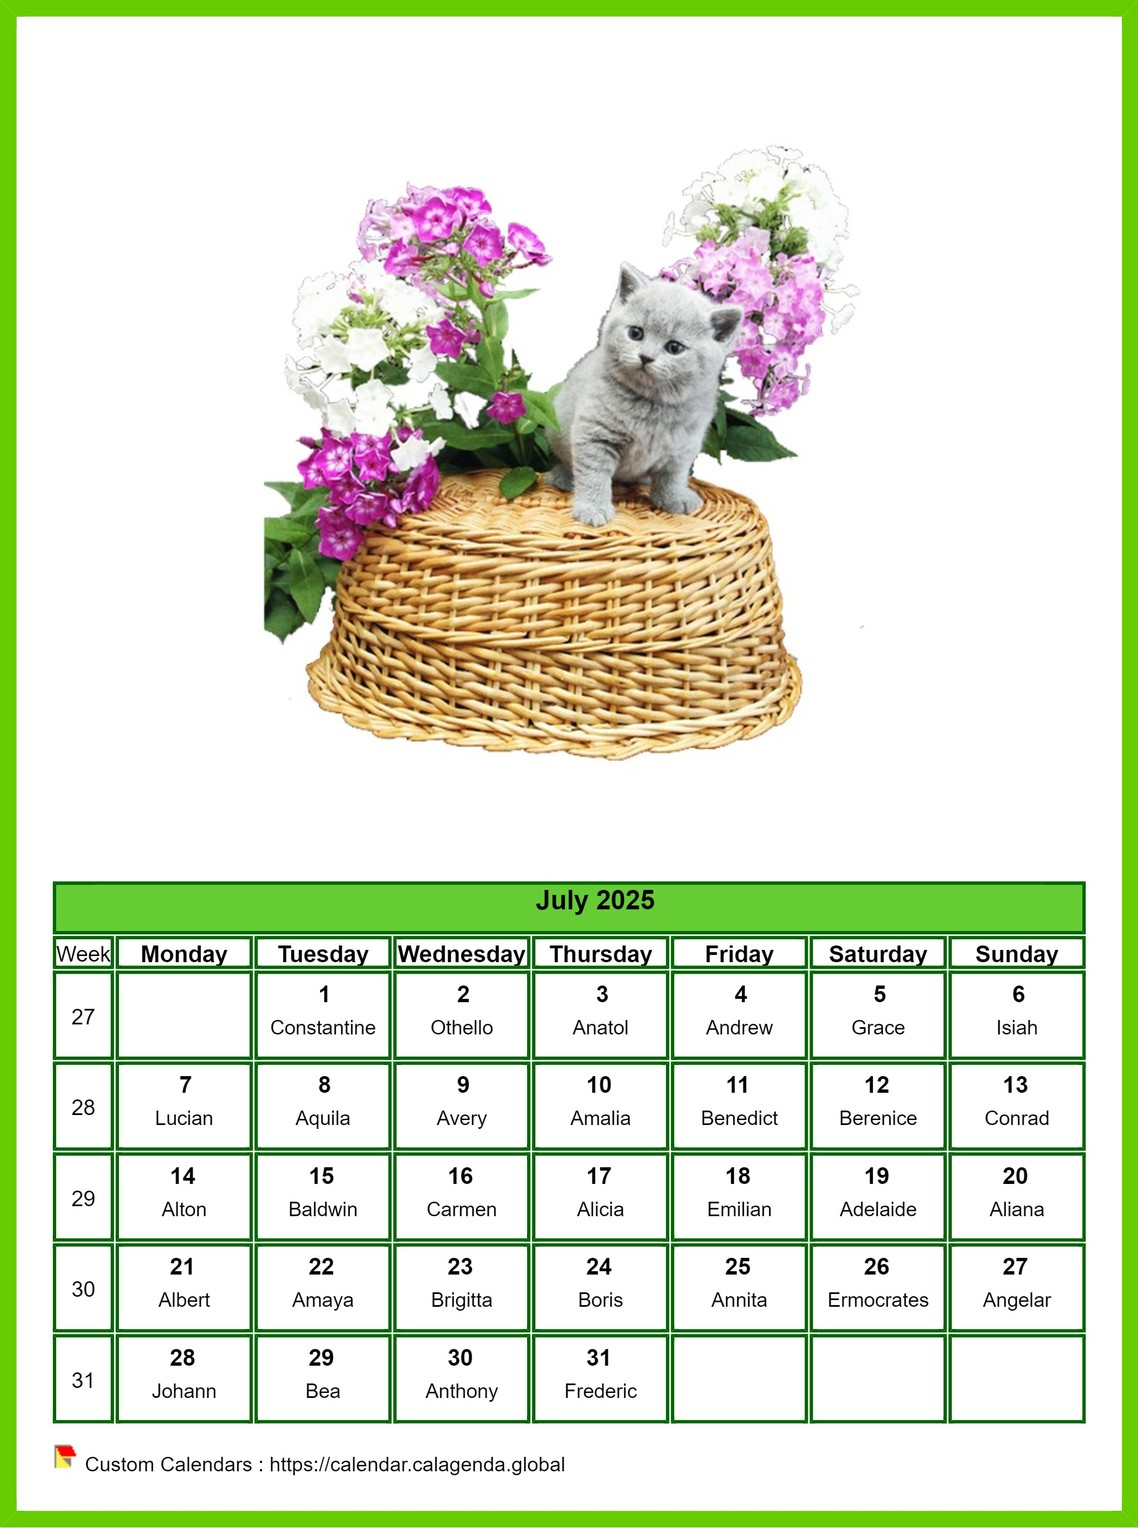 Calendar July 2025 cats